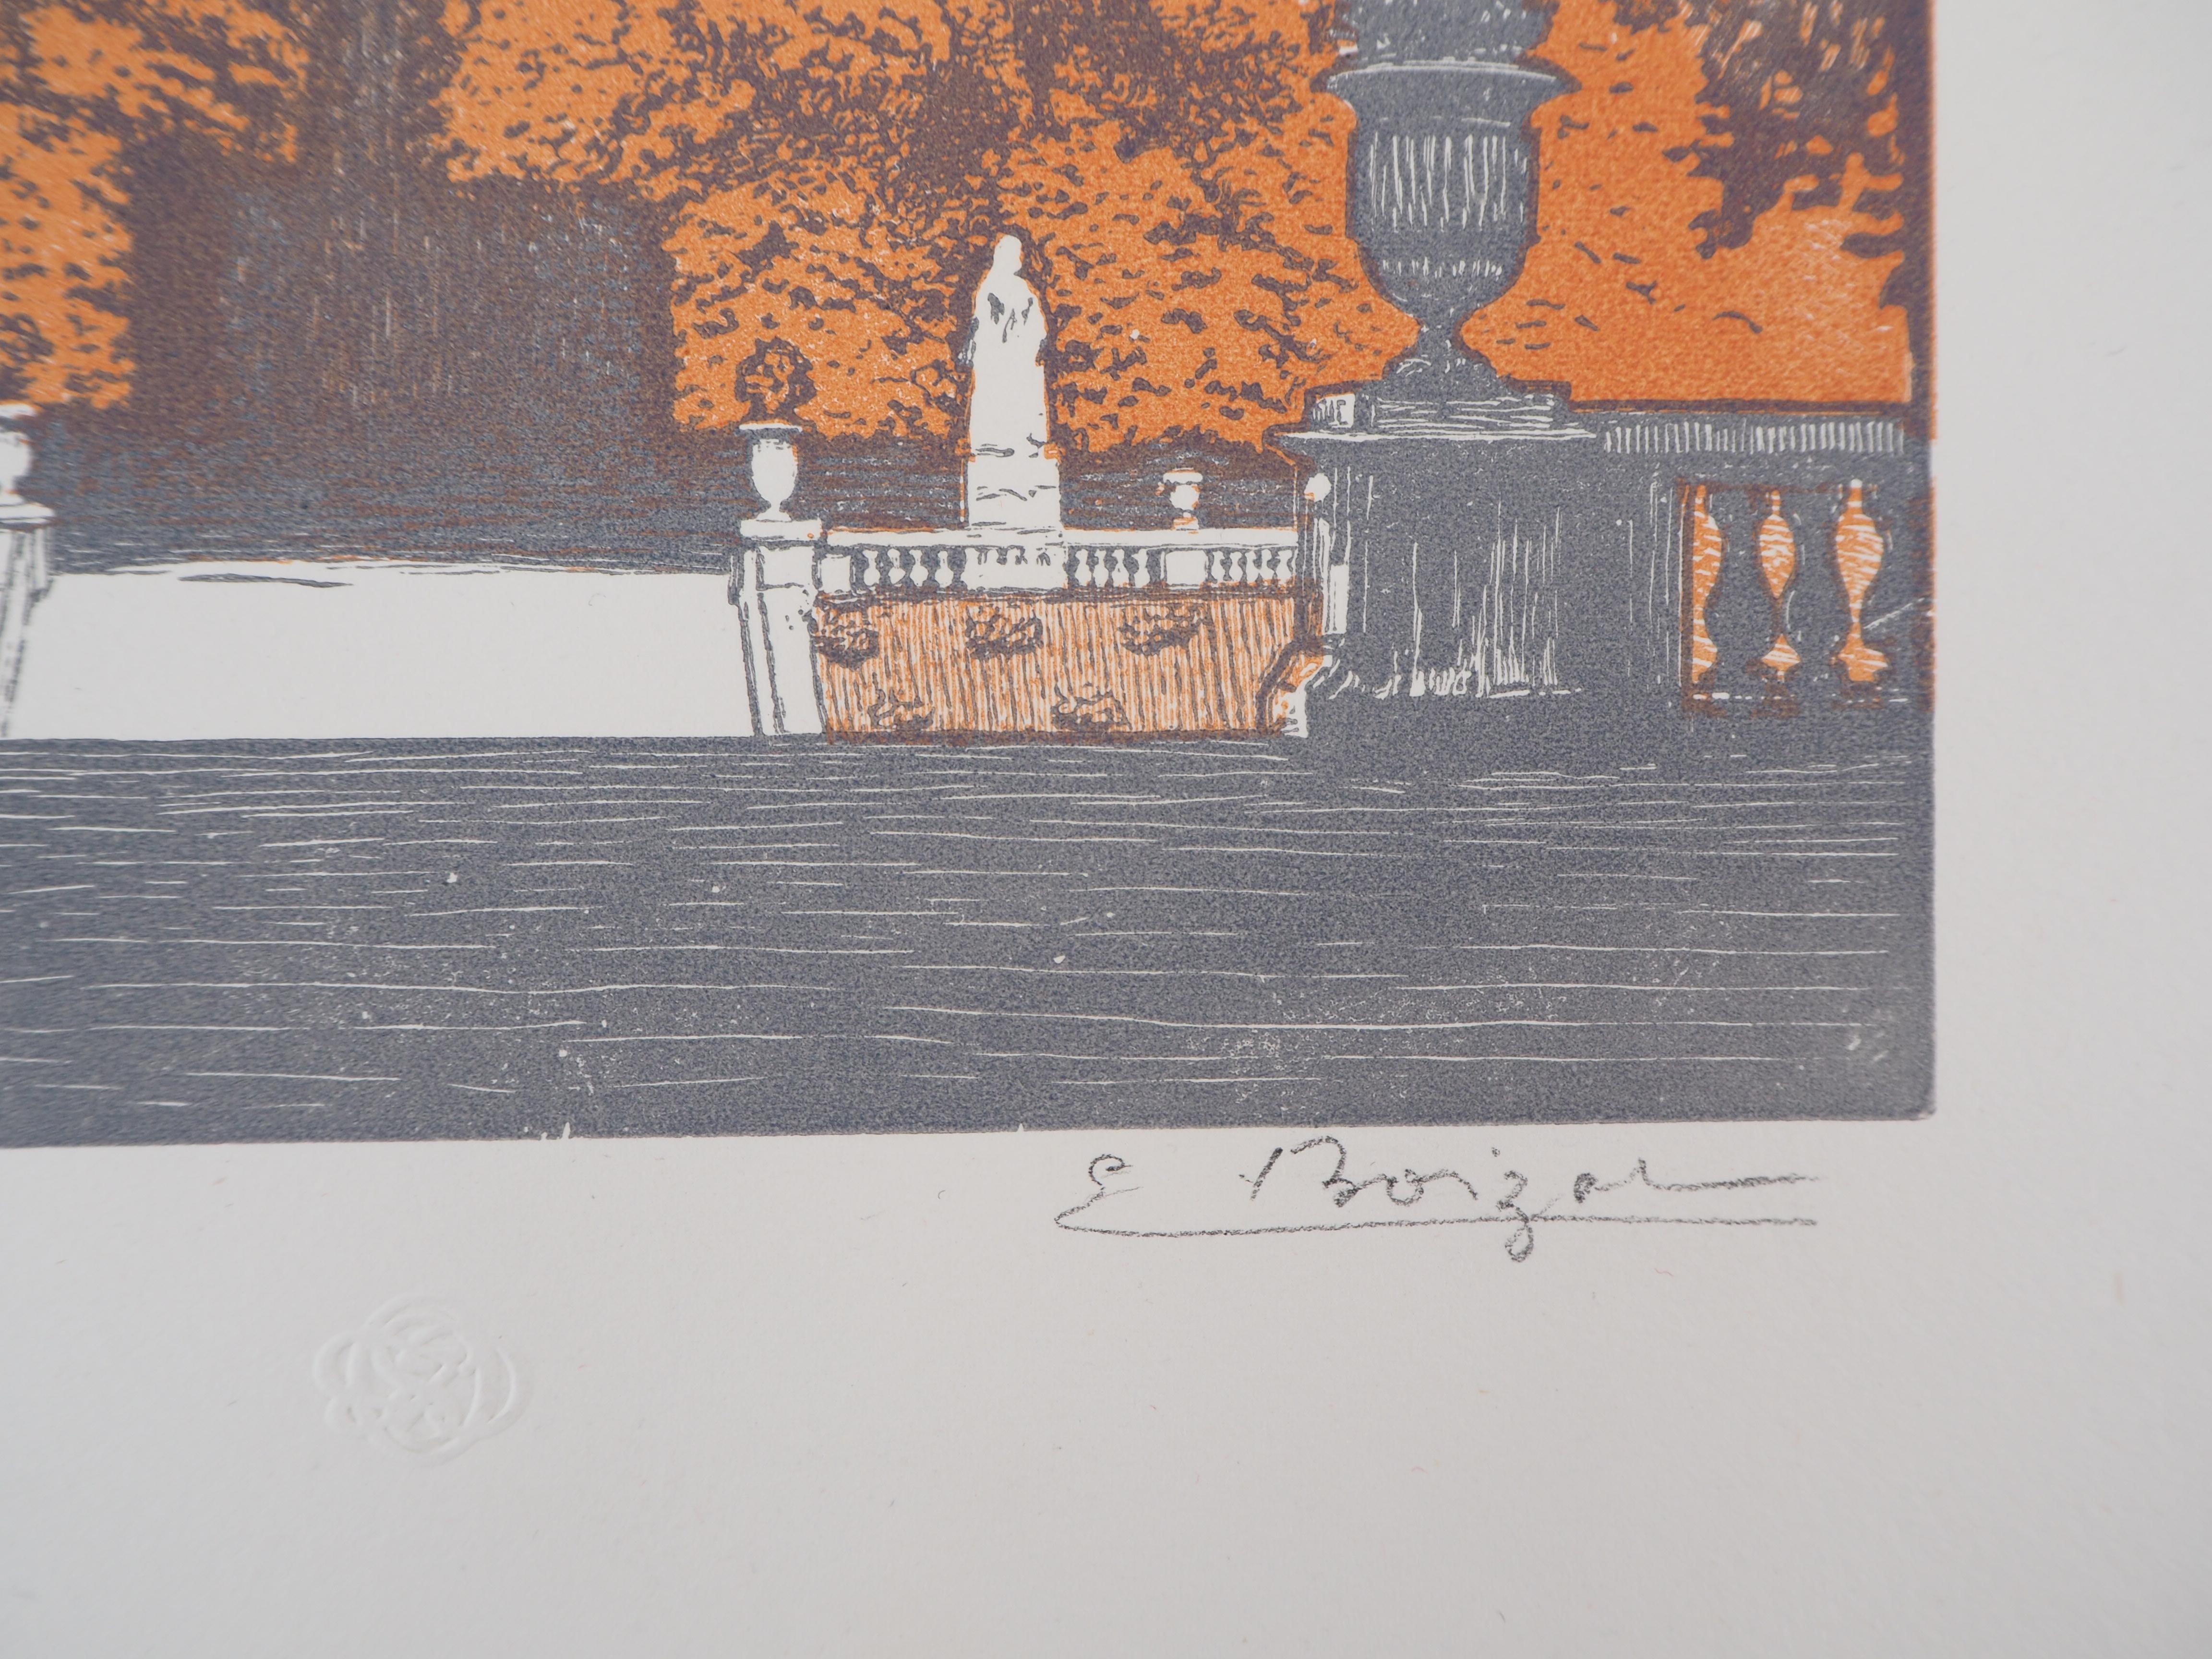 Emile BOIZOT
Paris, Luxemburgischer Garten - 1920

Original Holzschnitt
Handsigniert mit Bleistift
Nummeriert /165
Auf Pergament 32,5 x 25,5 cm (ca. 13 x 10 Zoll)
Trägt den Blindstempel des Herausgebers 'Imagier de la Gravure sur Bois' (Lugt